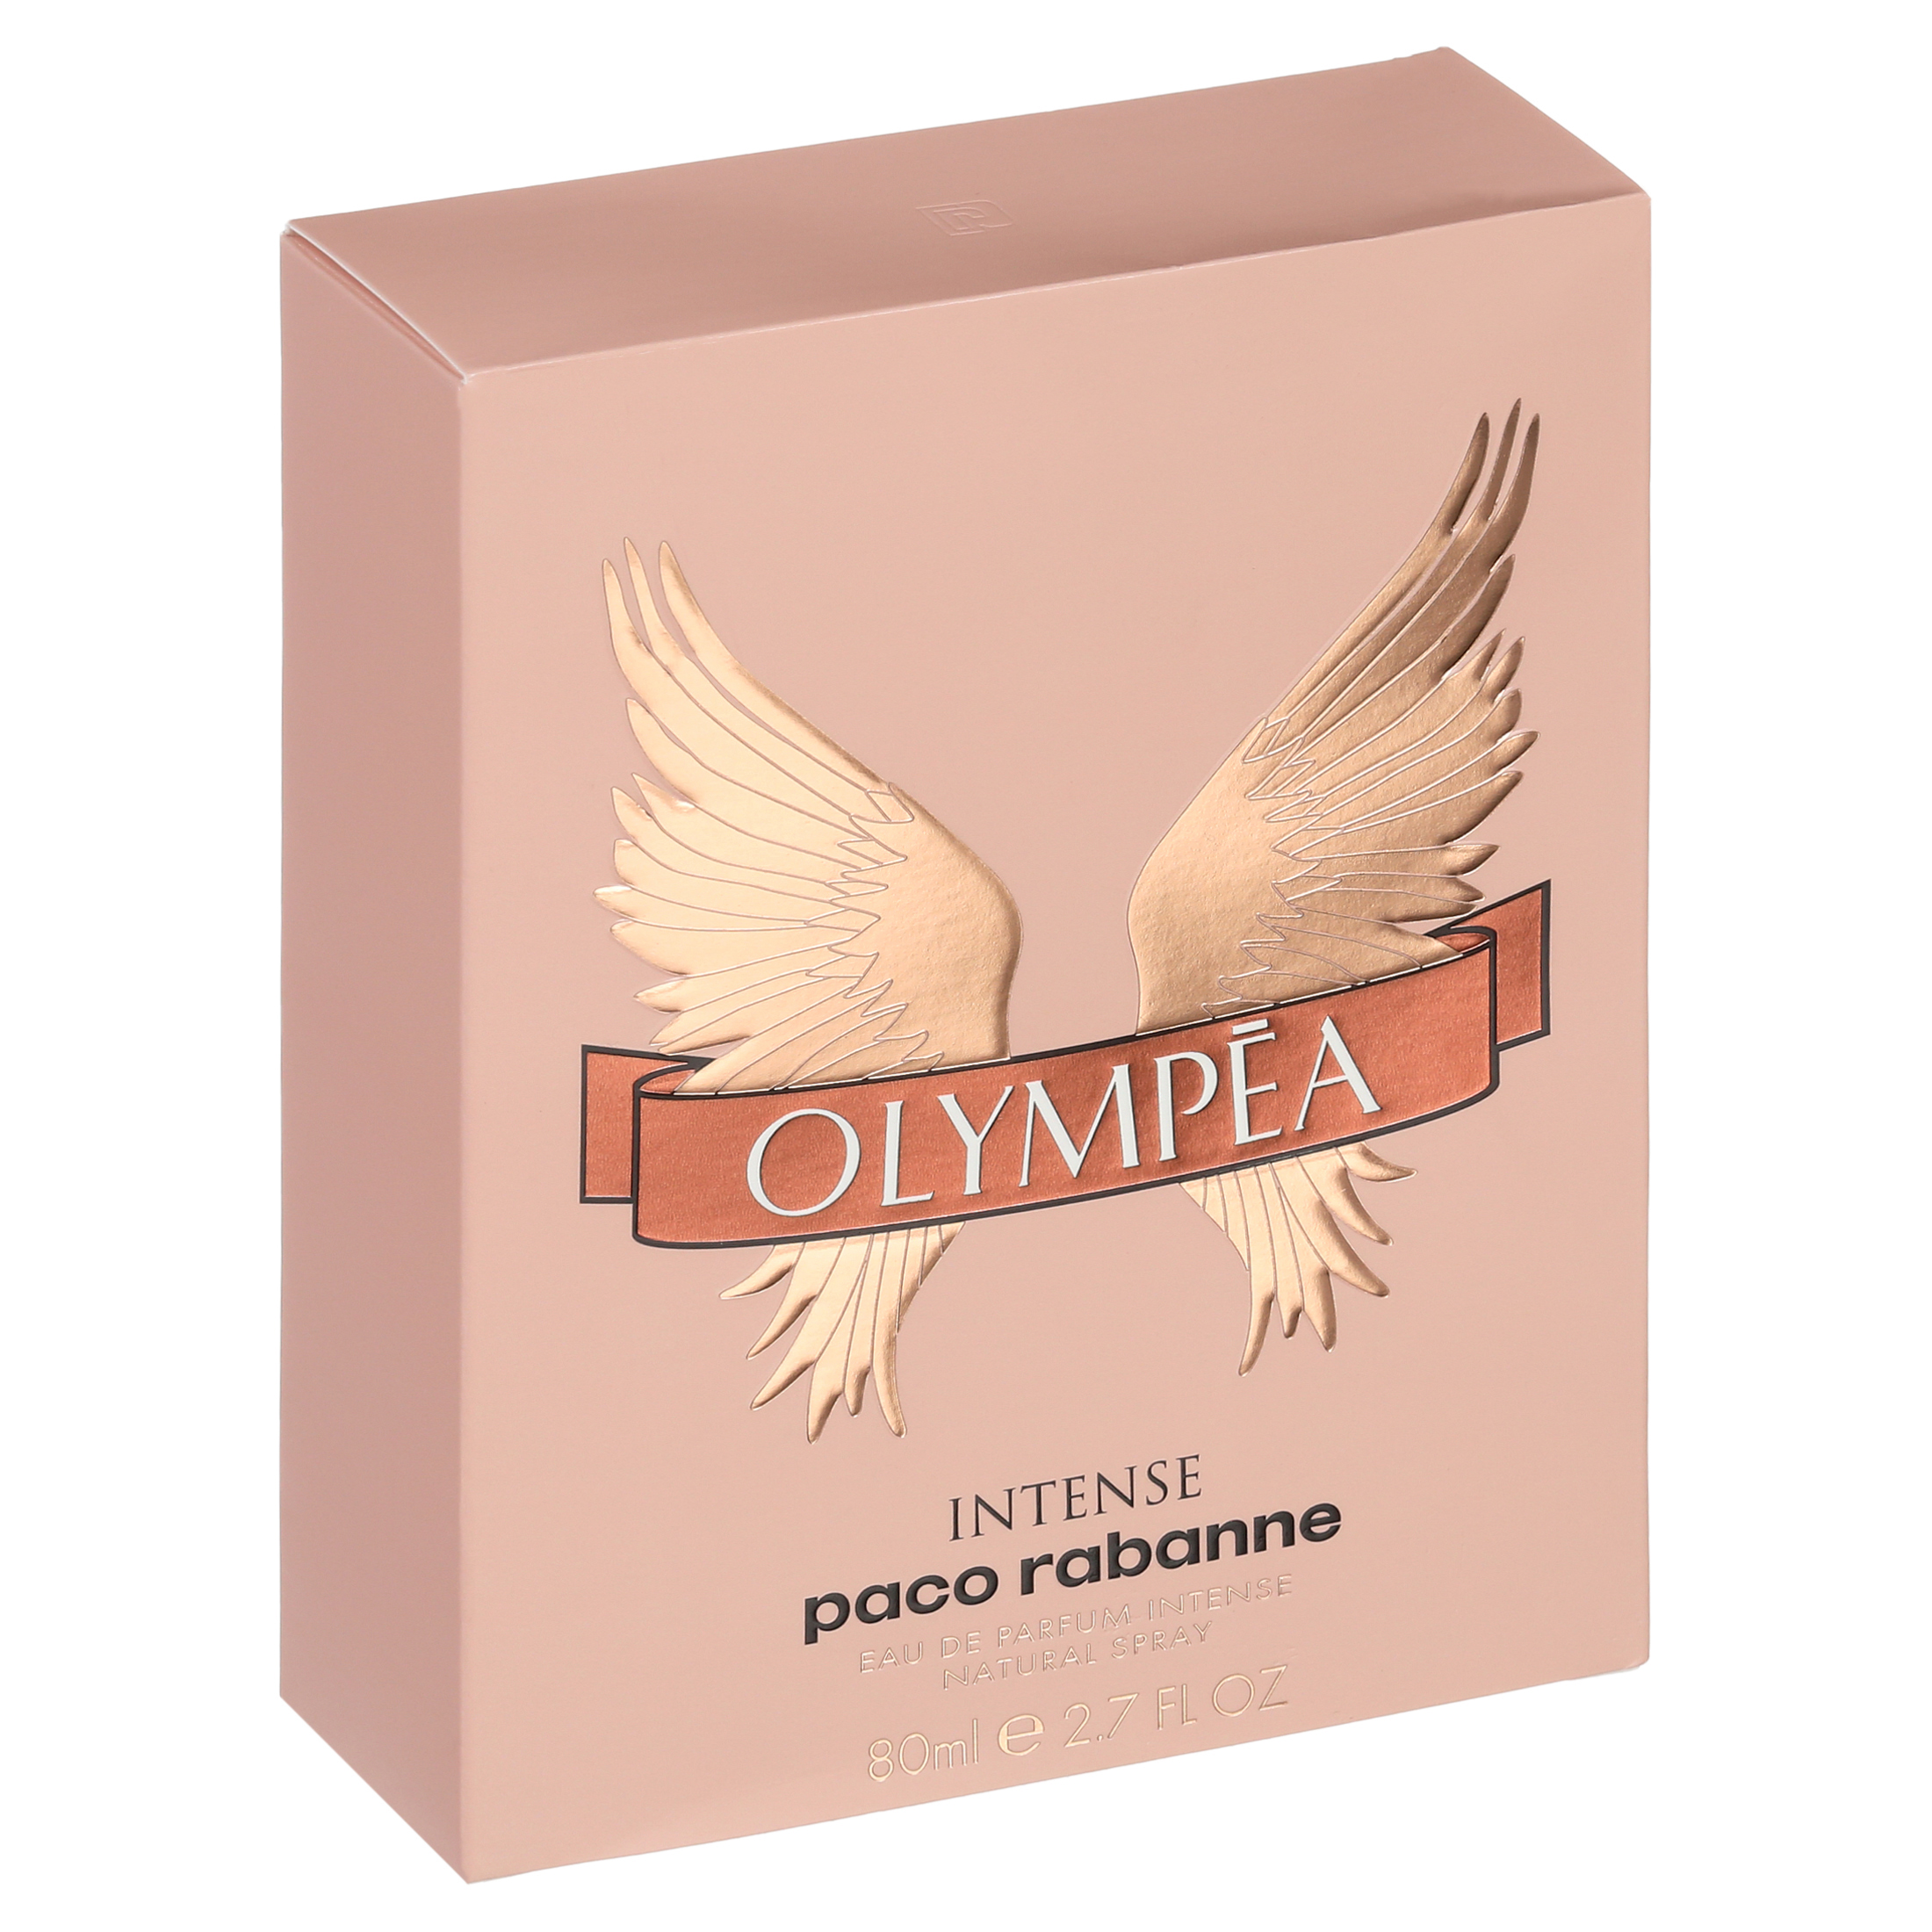 Paco Rabanne Olympea Intense Eau De Parfum Spray for Women 2.7 oz - image 6 of 9